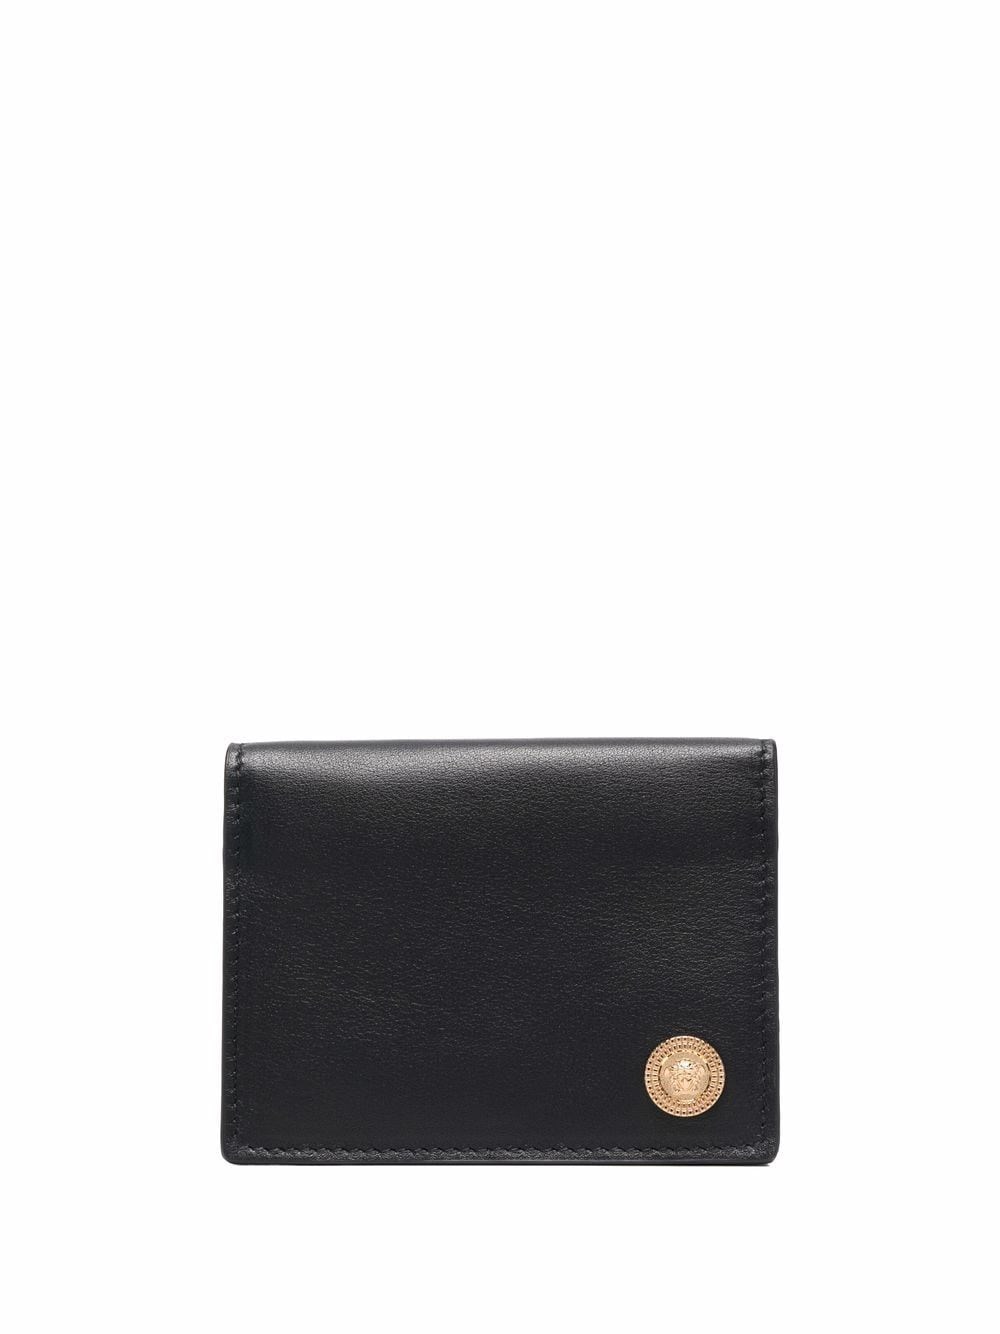 Versace Medusa Leather Wallet In Black